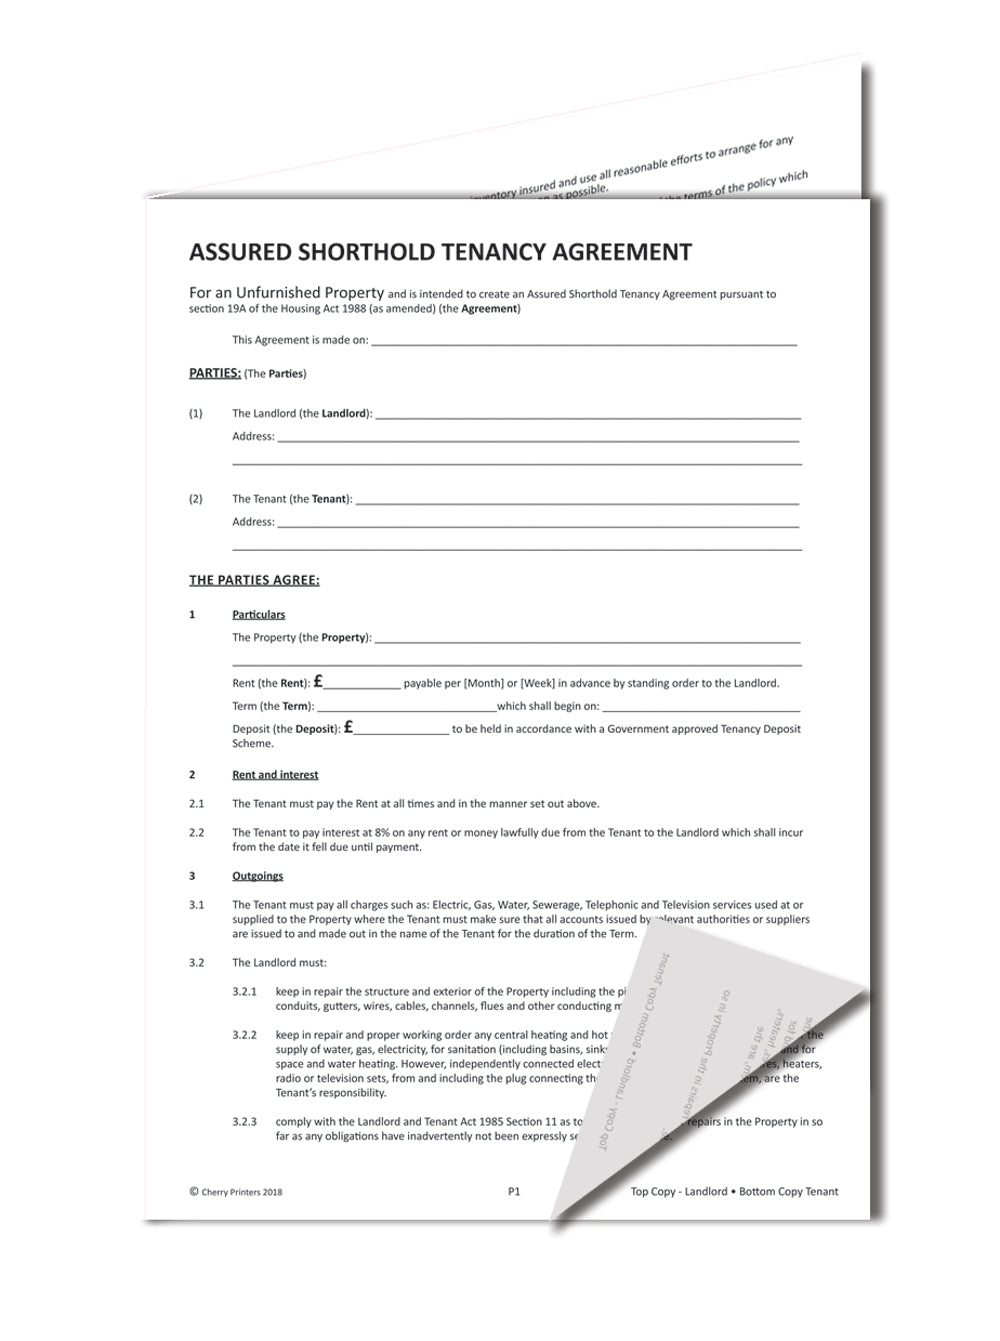 NCR Assured Shorthold Tenancy Agreement for Unfurnished Property (England & Wales) Carbonless Duplicate Sets 2part A4 4pp